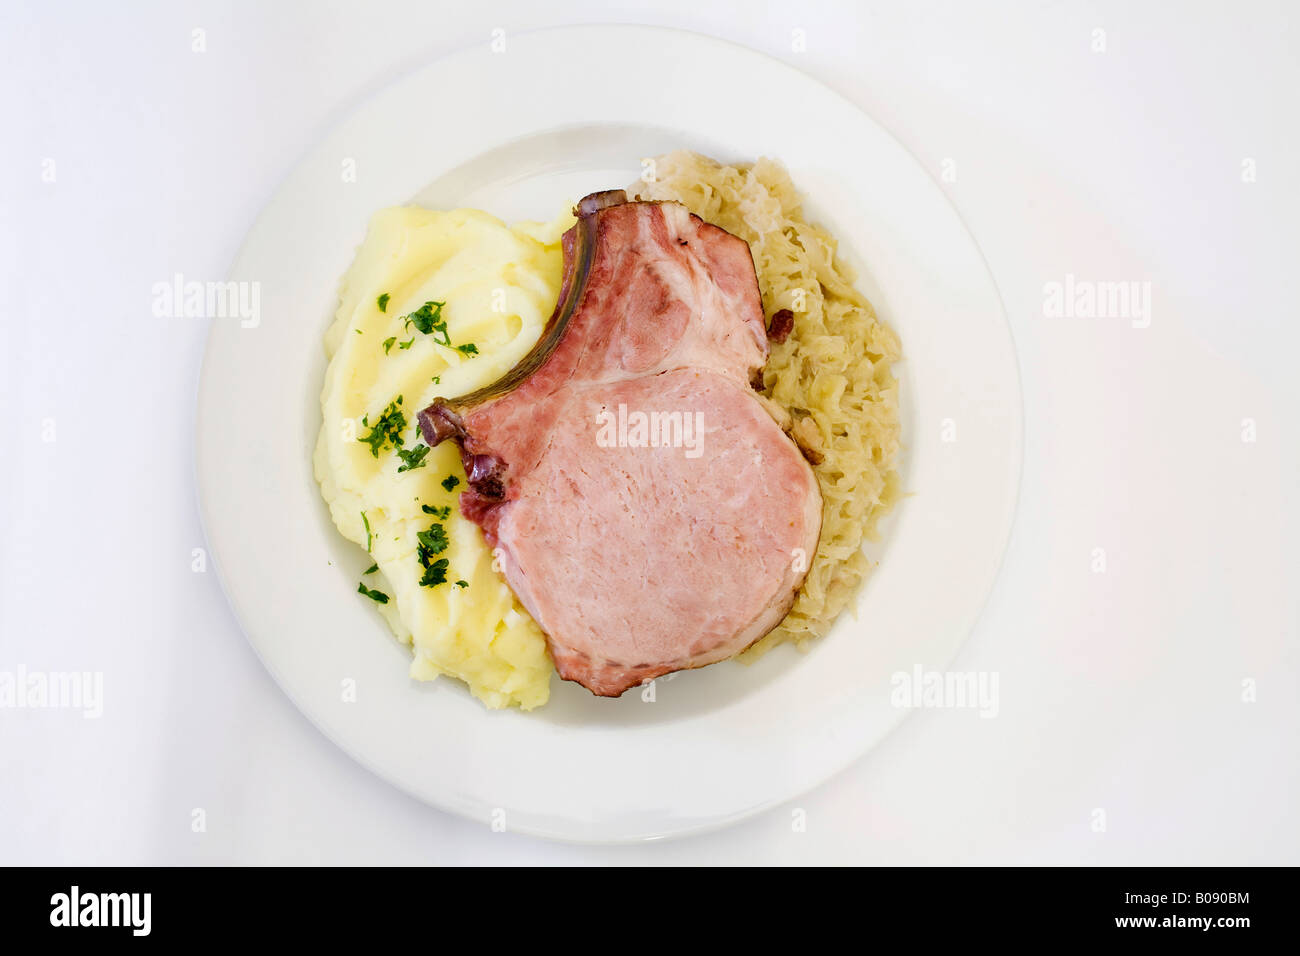 Smoked pork loin with sauerkraut and mashed potatoes Stock Photo